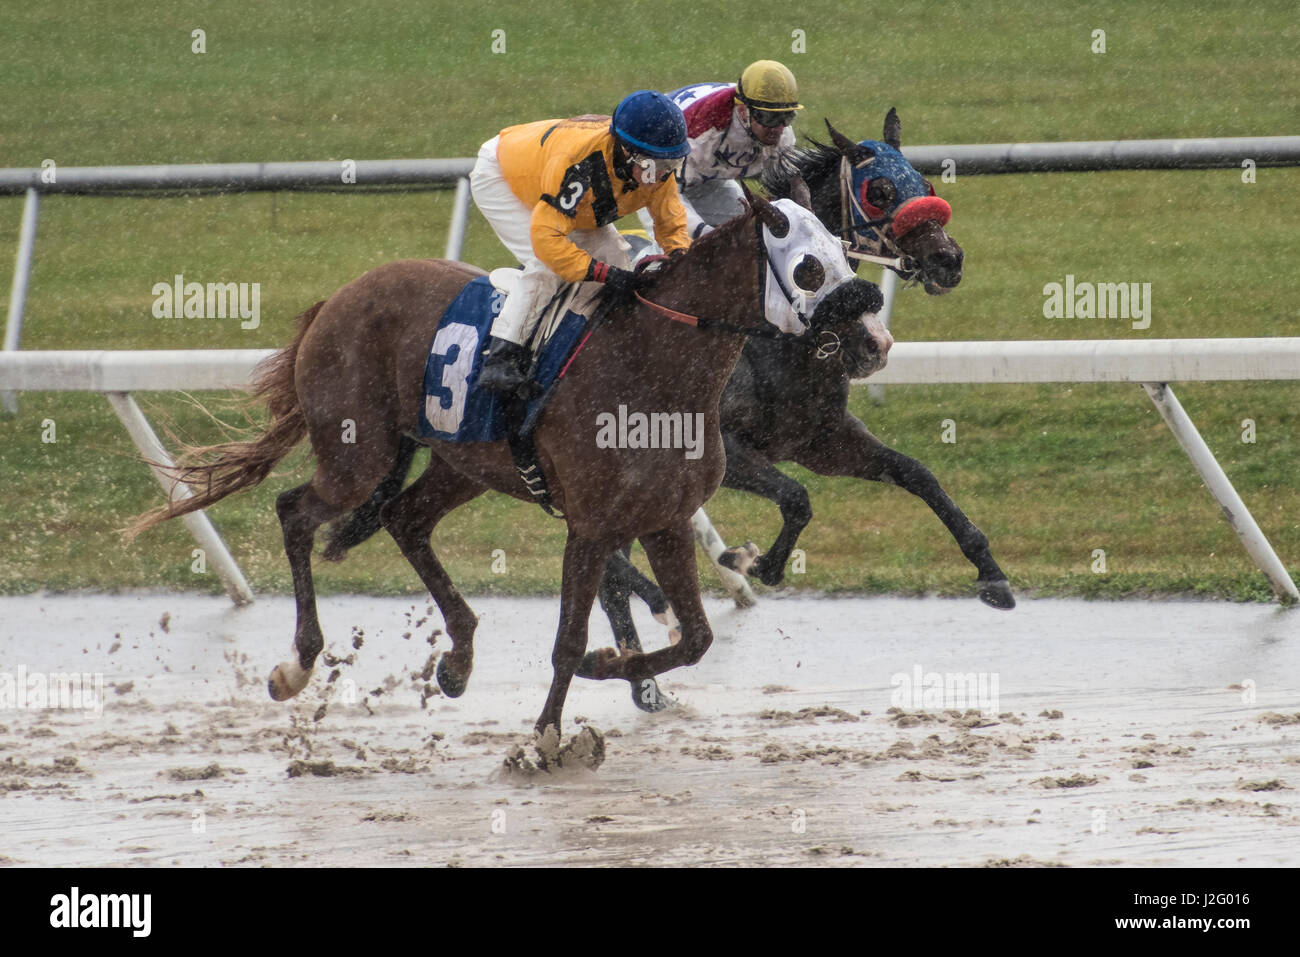 Pferde und Jockeys Kopf an Kopf Rennen im Regen, tiefen Tampa, Florida Stockfoto